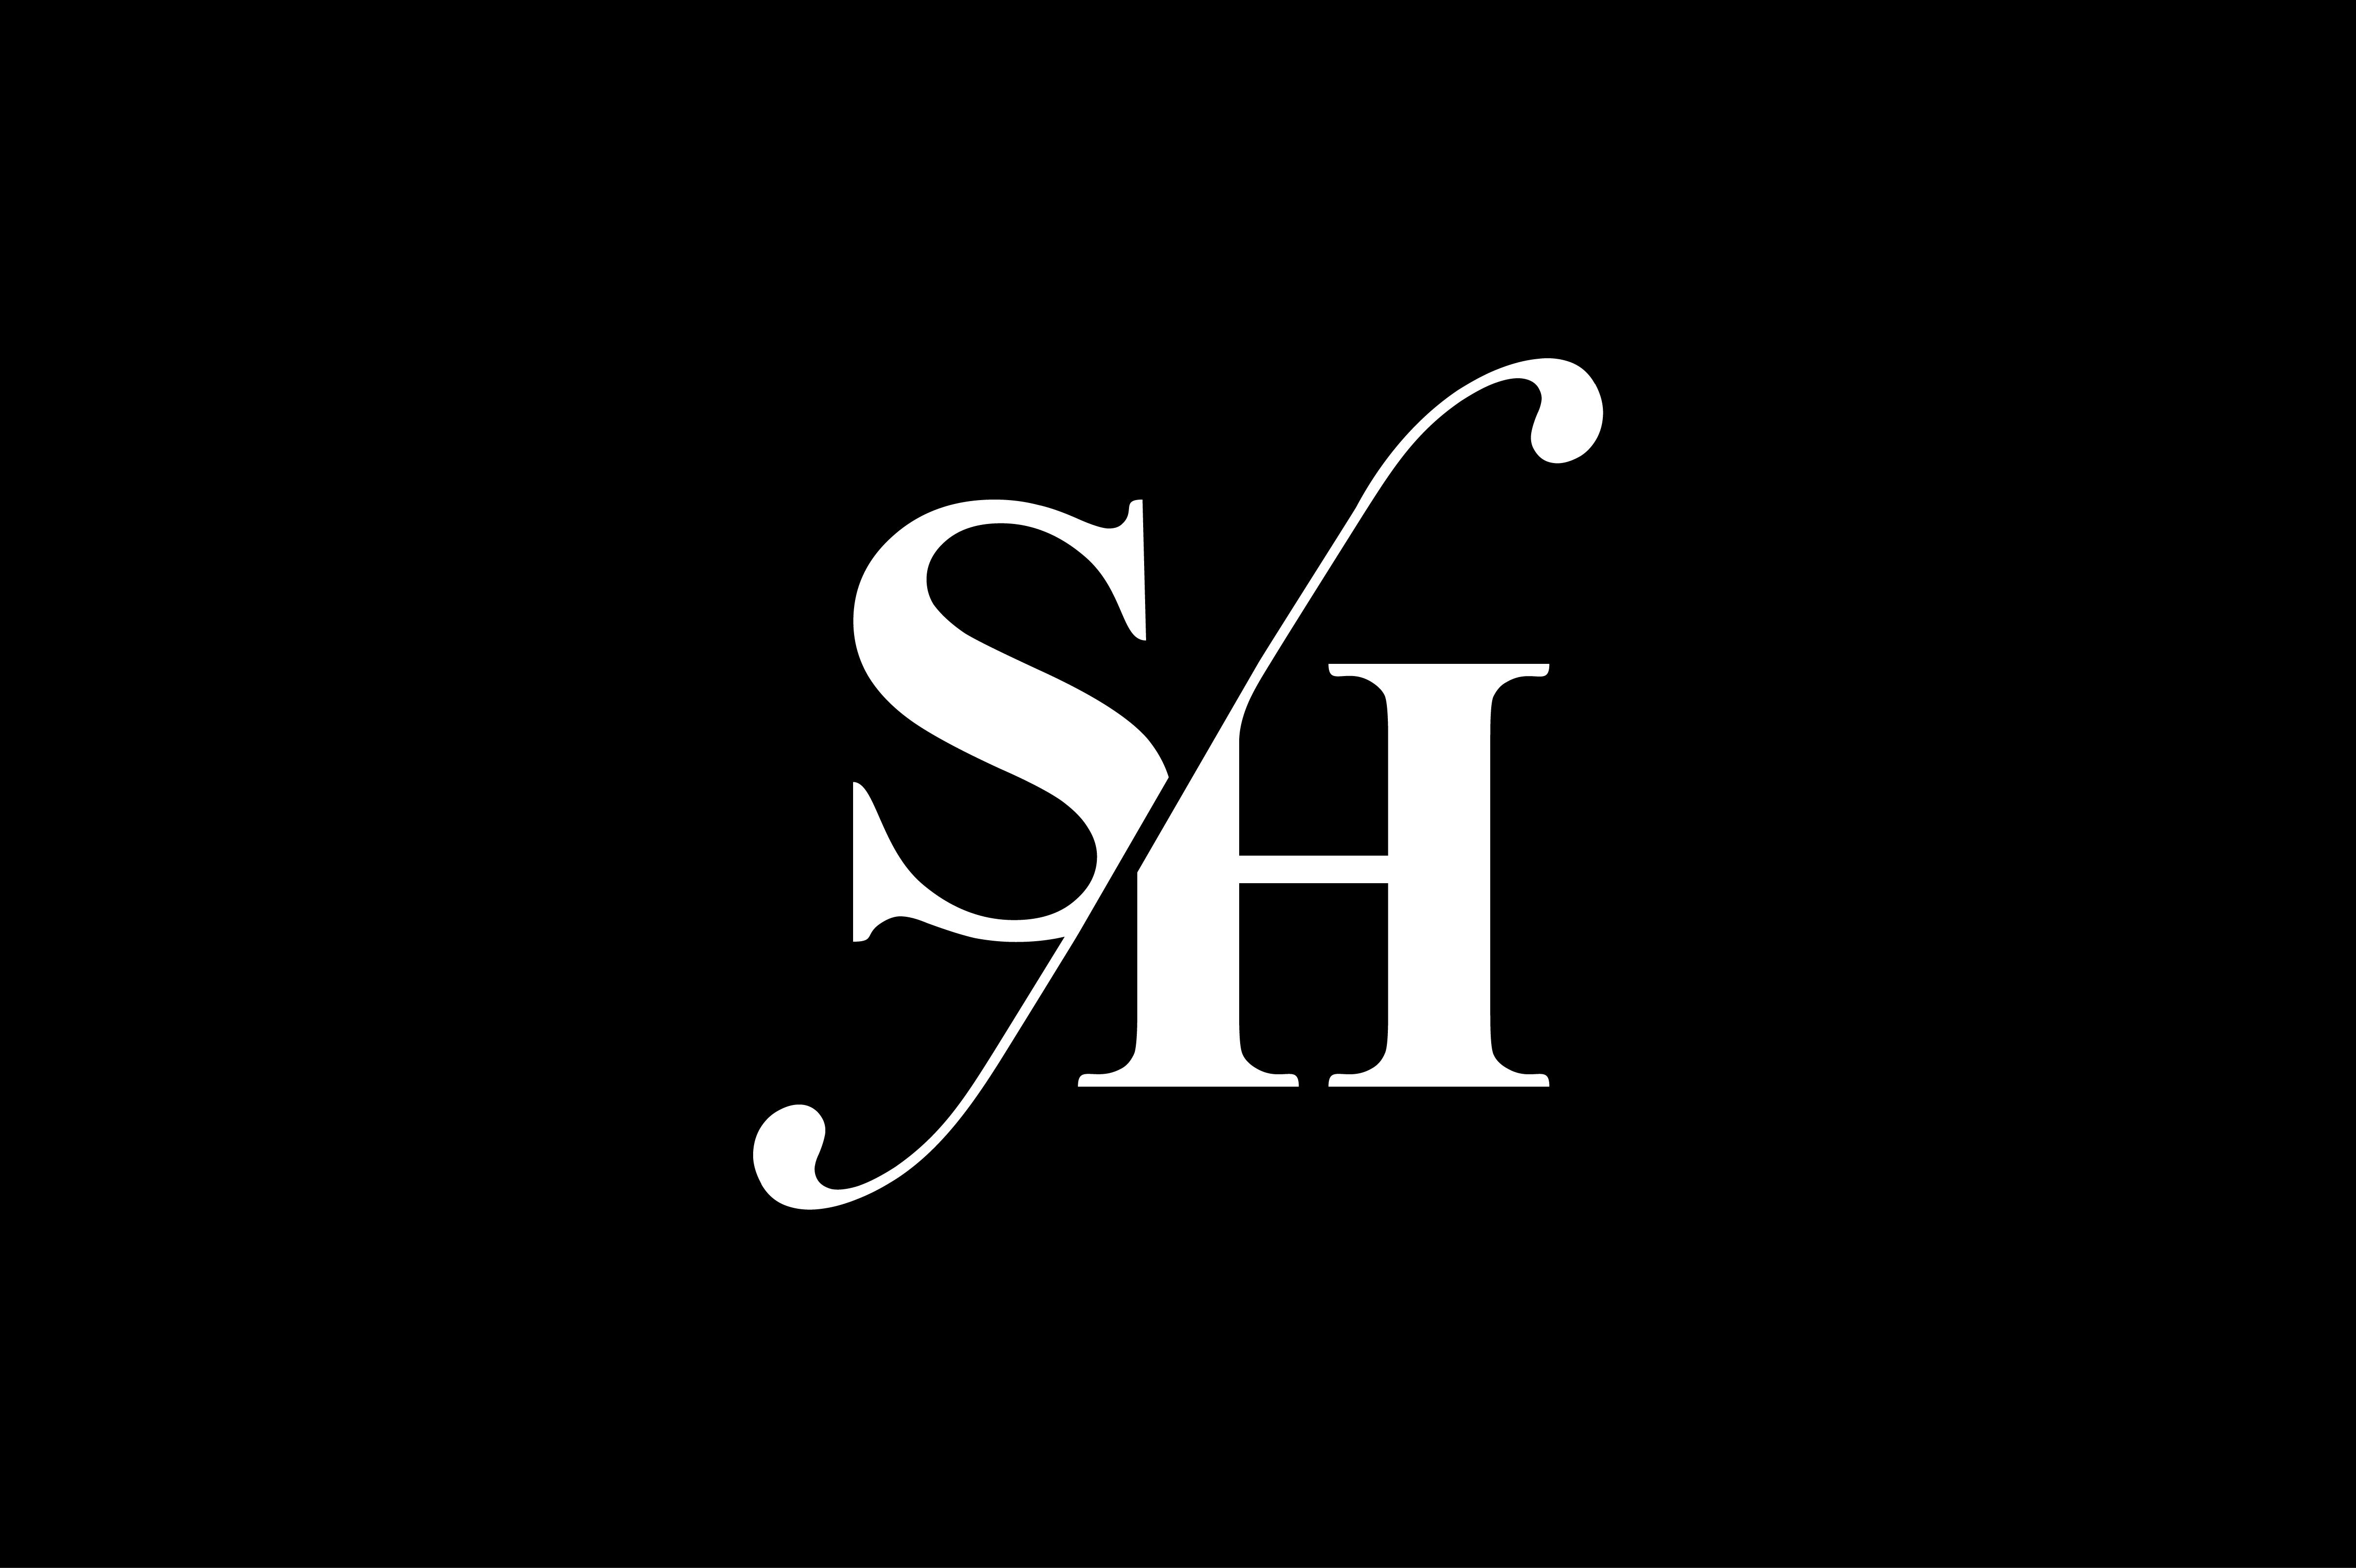 sh-monogram-logo-design-by-vectorseller-thehungryjpeg